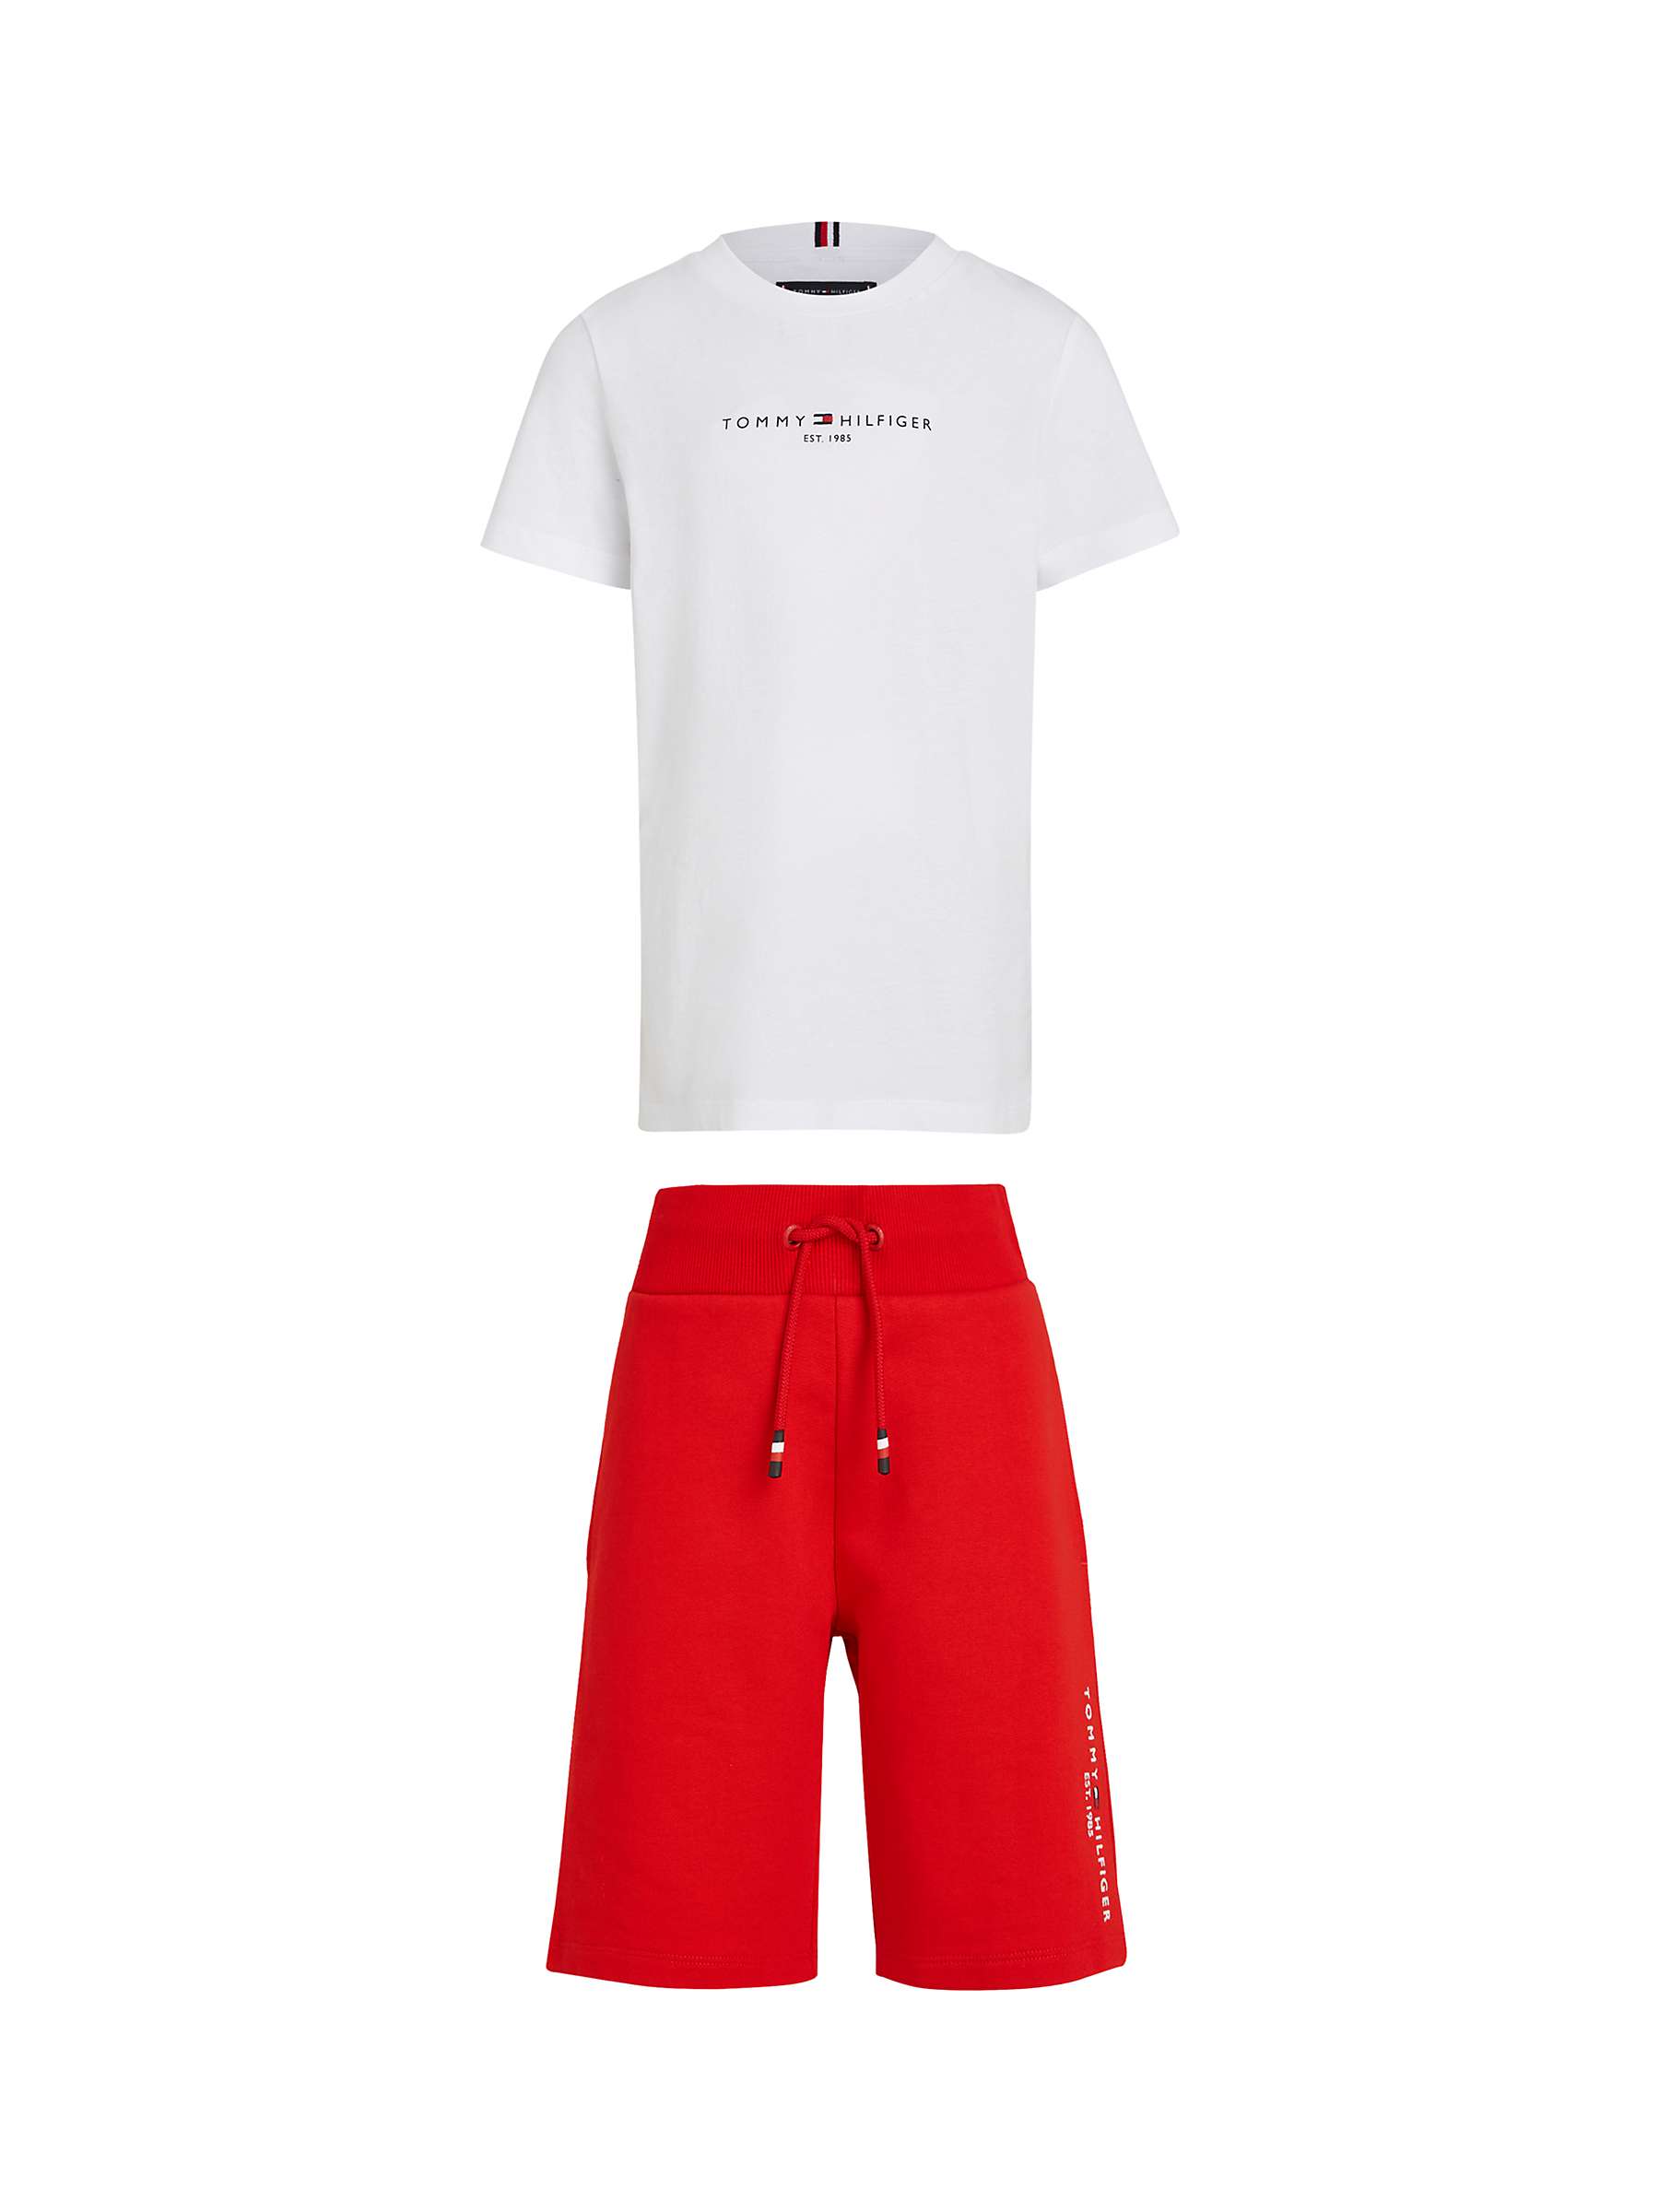 Buy Tommy Hilfiger Kids' Essential Logo T-Shirt & Shorts Set, White/Fierce Red Online at johnlewis.com